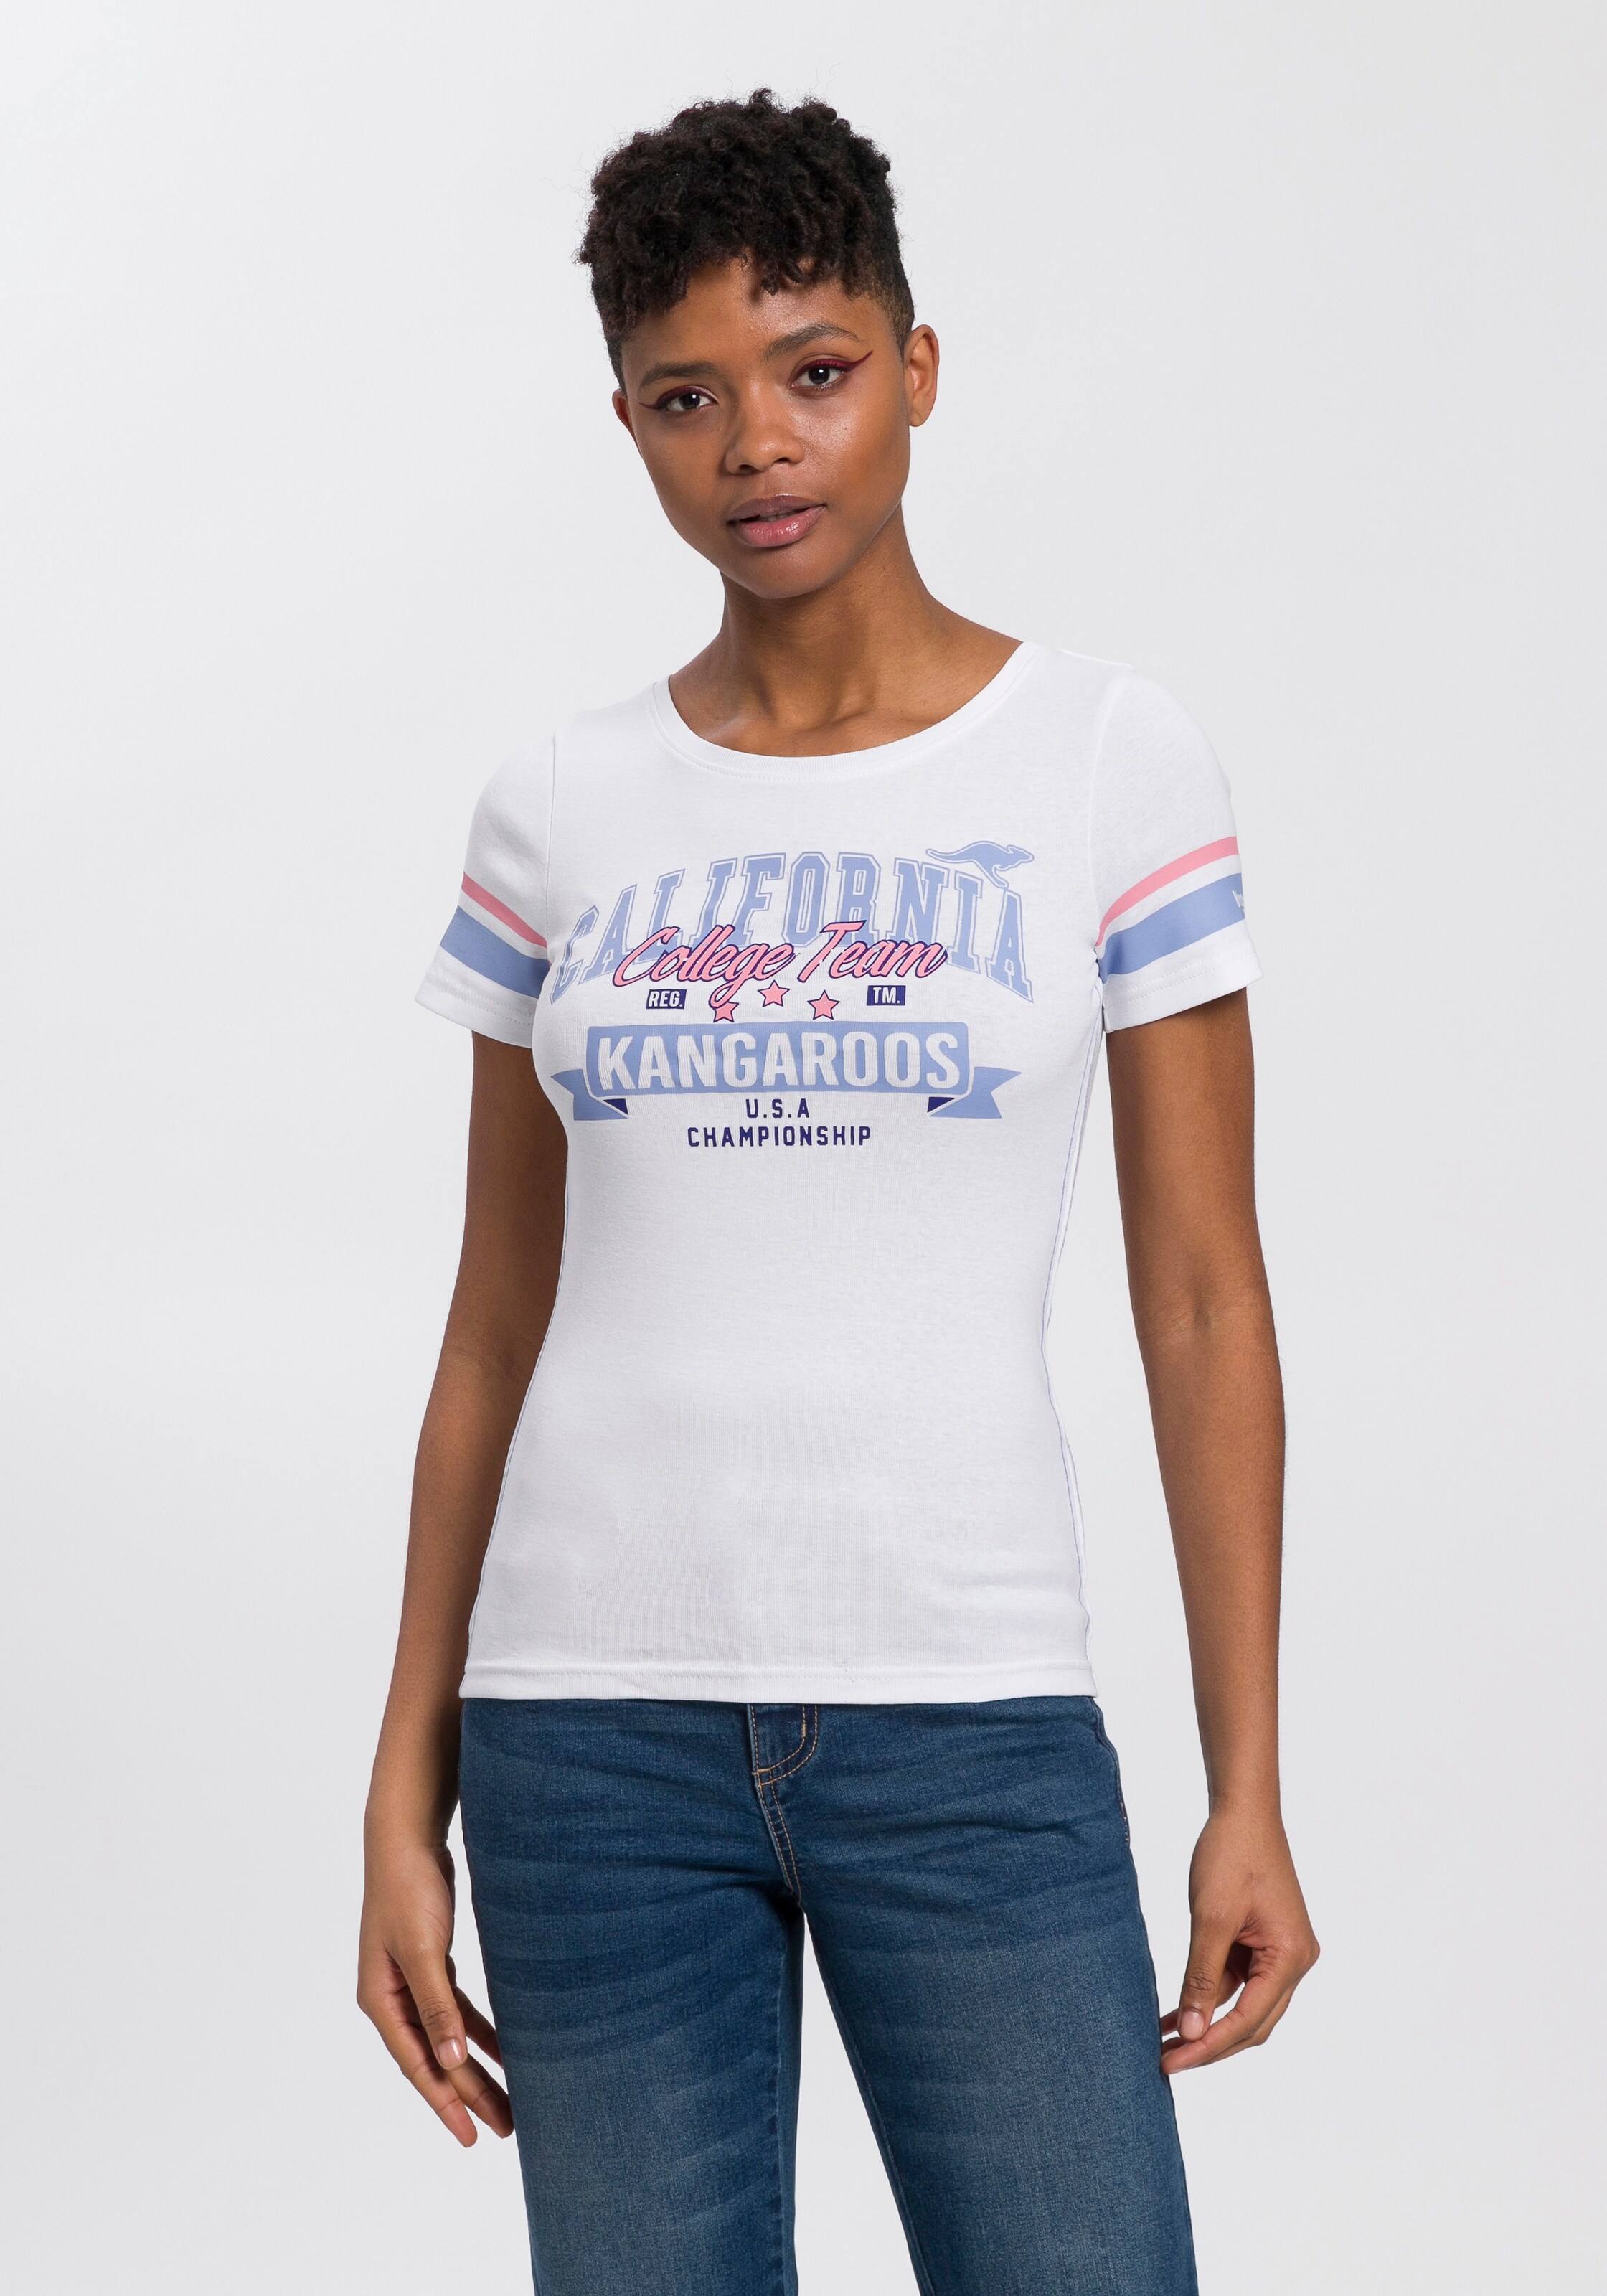 Frauen Shirts & Tops KangaROOS Shirt in Weiß - PX81654